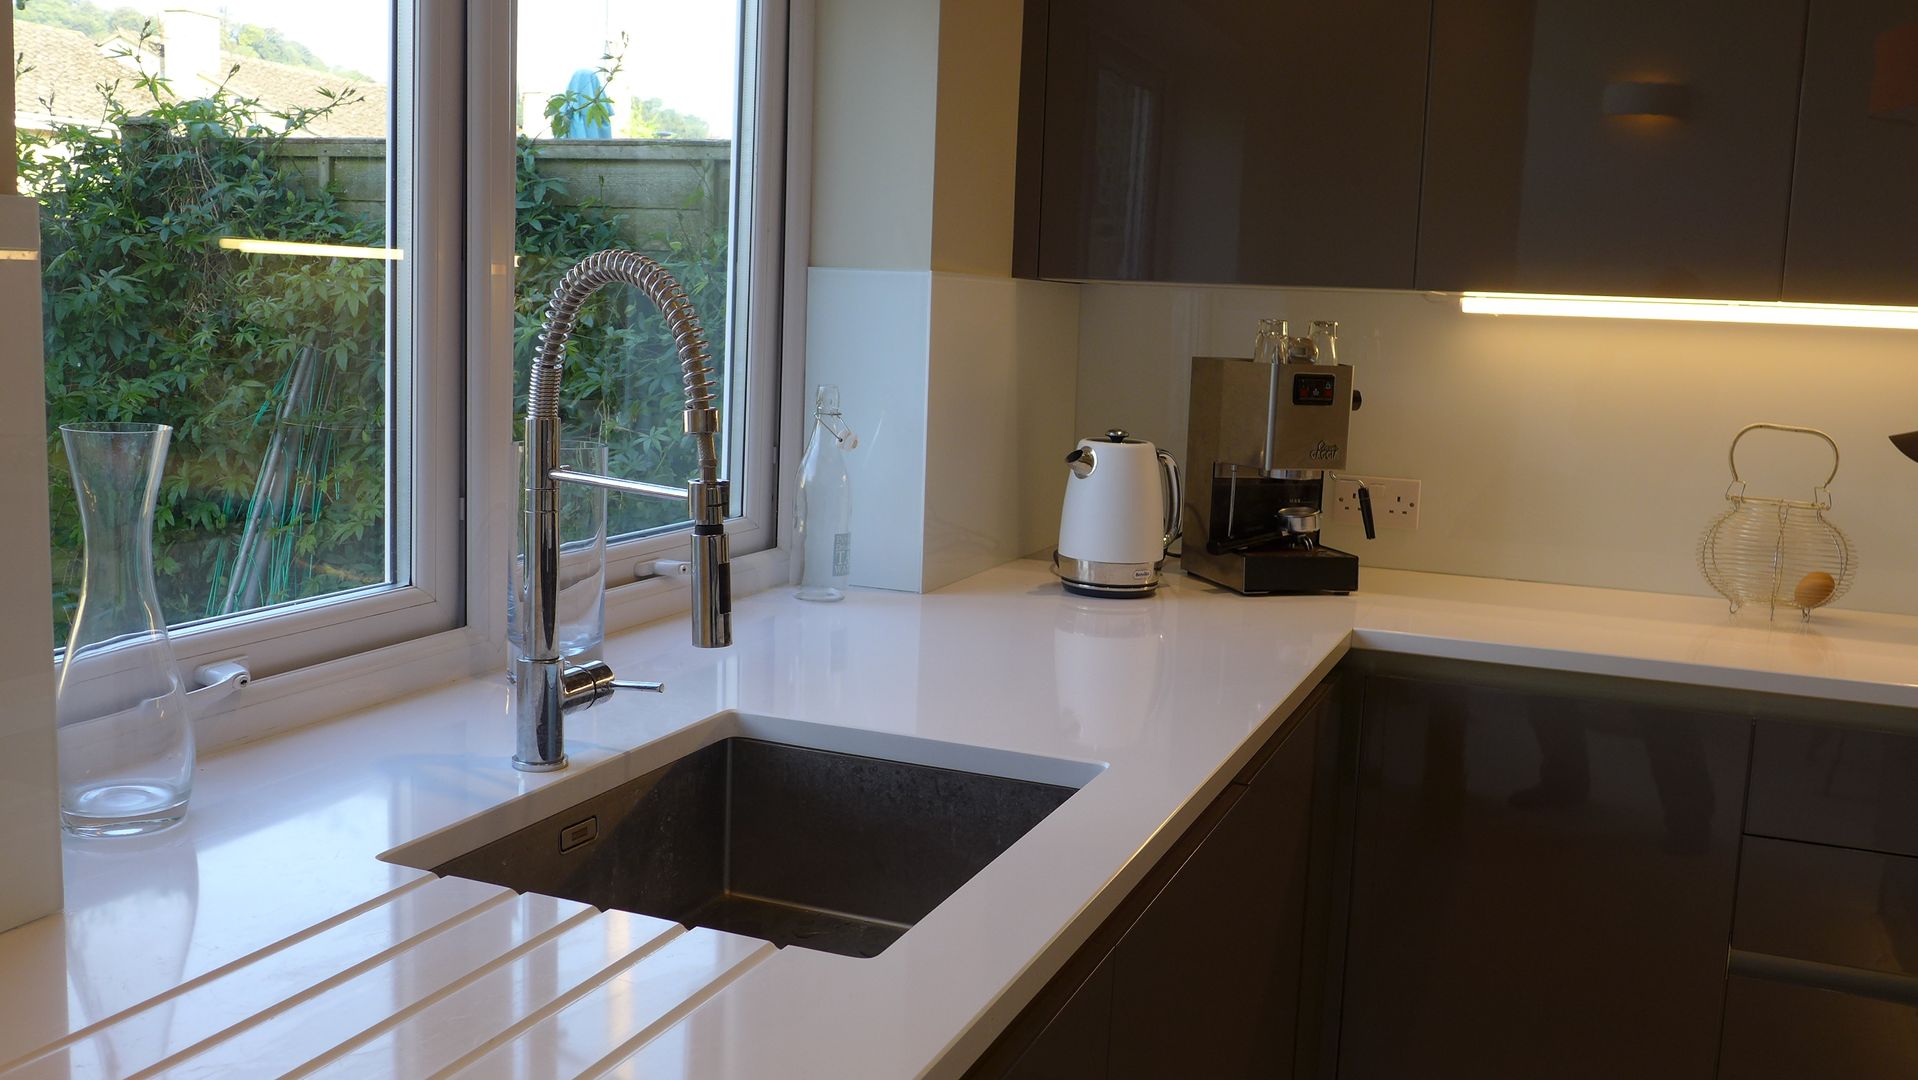 White quartz worktop with undermount sink Style Within Cozinhas modernas kitchen tap,undermount sink,quartz worktop,white worktop,grey kitchen,swan neck tap,flexible tap,pelmet light